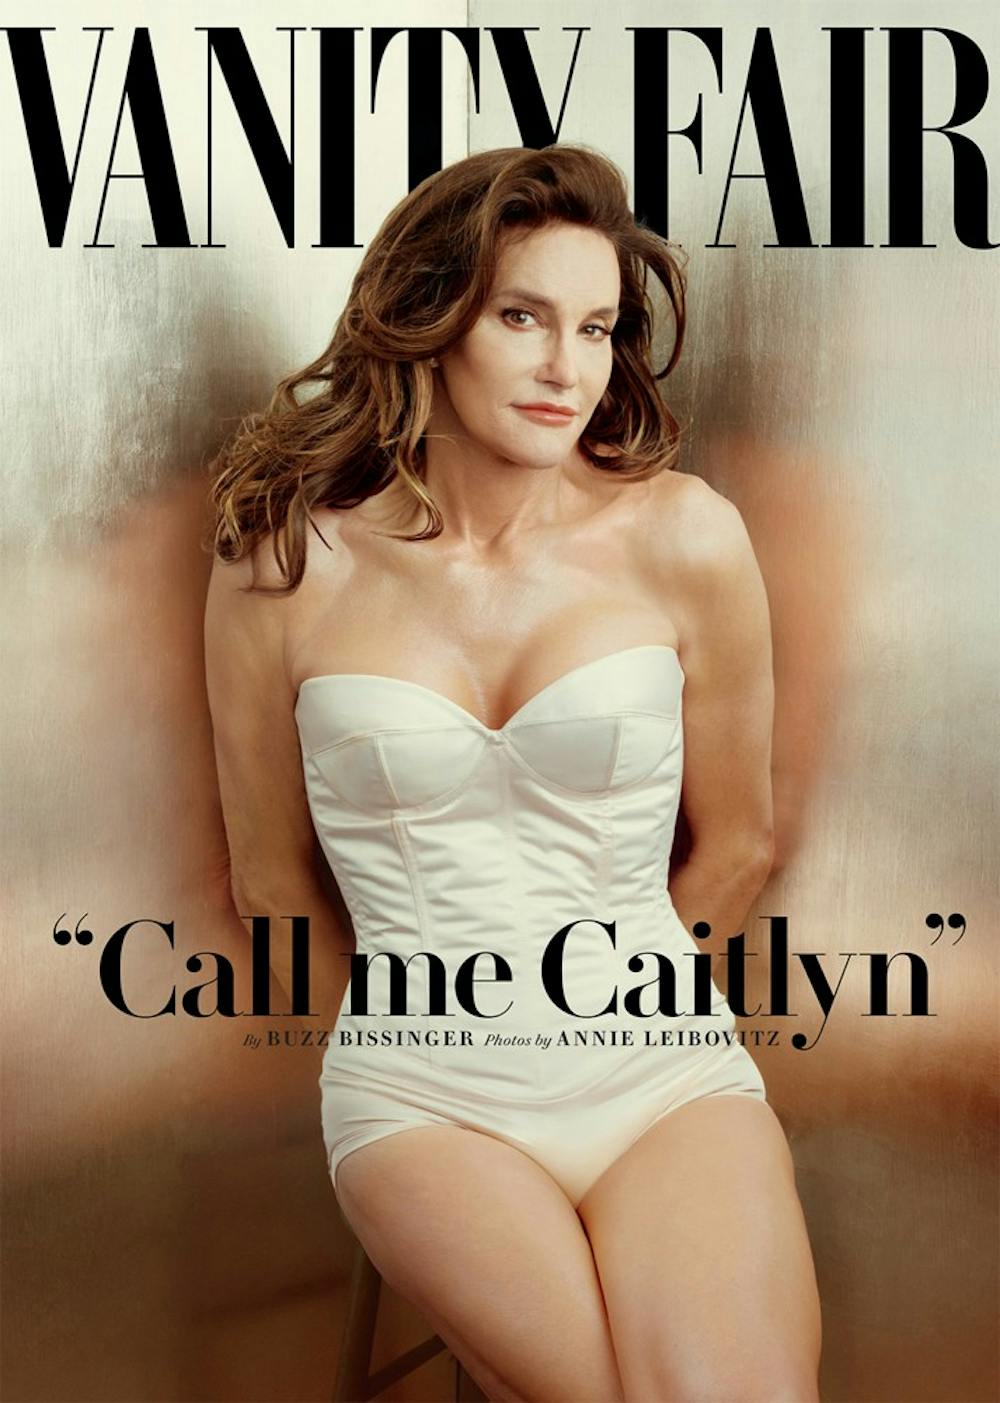 Caitlyn Jenner on the cover of "Vanity Fair." (Vanity Fair) 